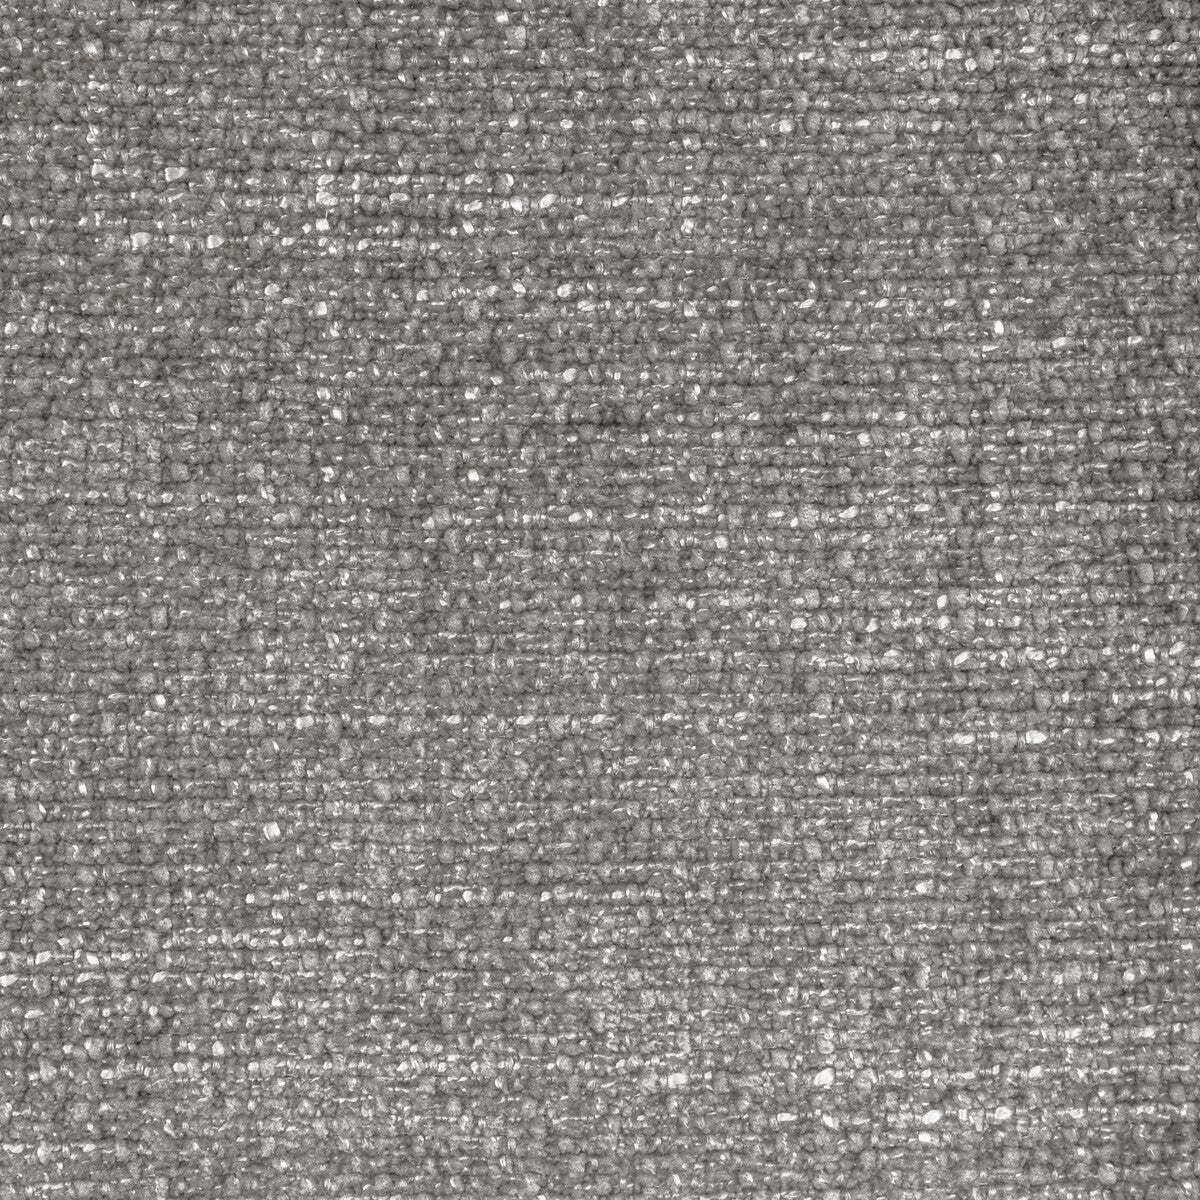 Kravet Smart fabric in 36578-21 color - pattern 36578.21.0 - by Kravet Smart in the Performance Kravetarmor collection